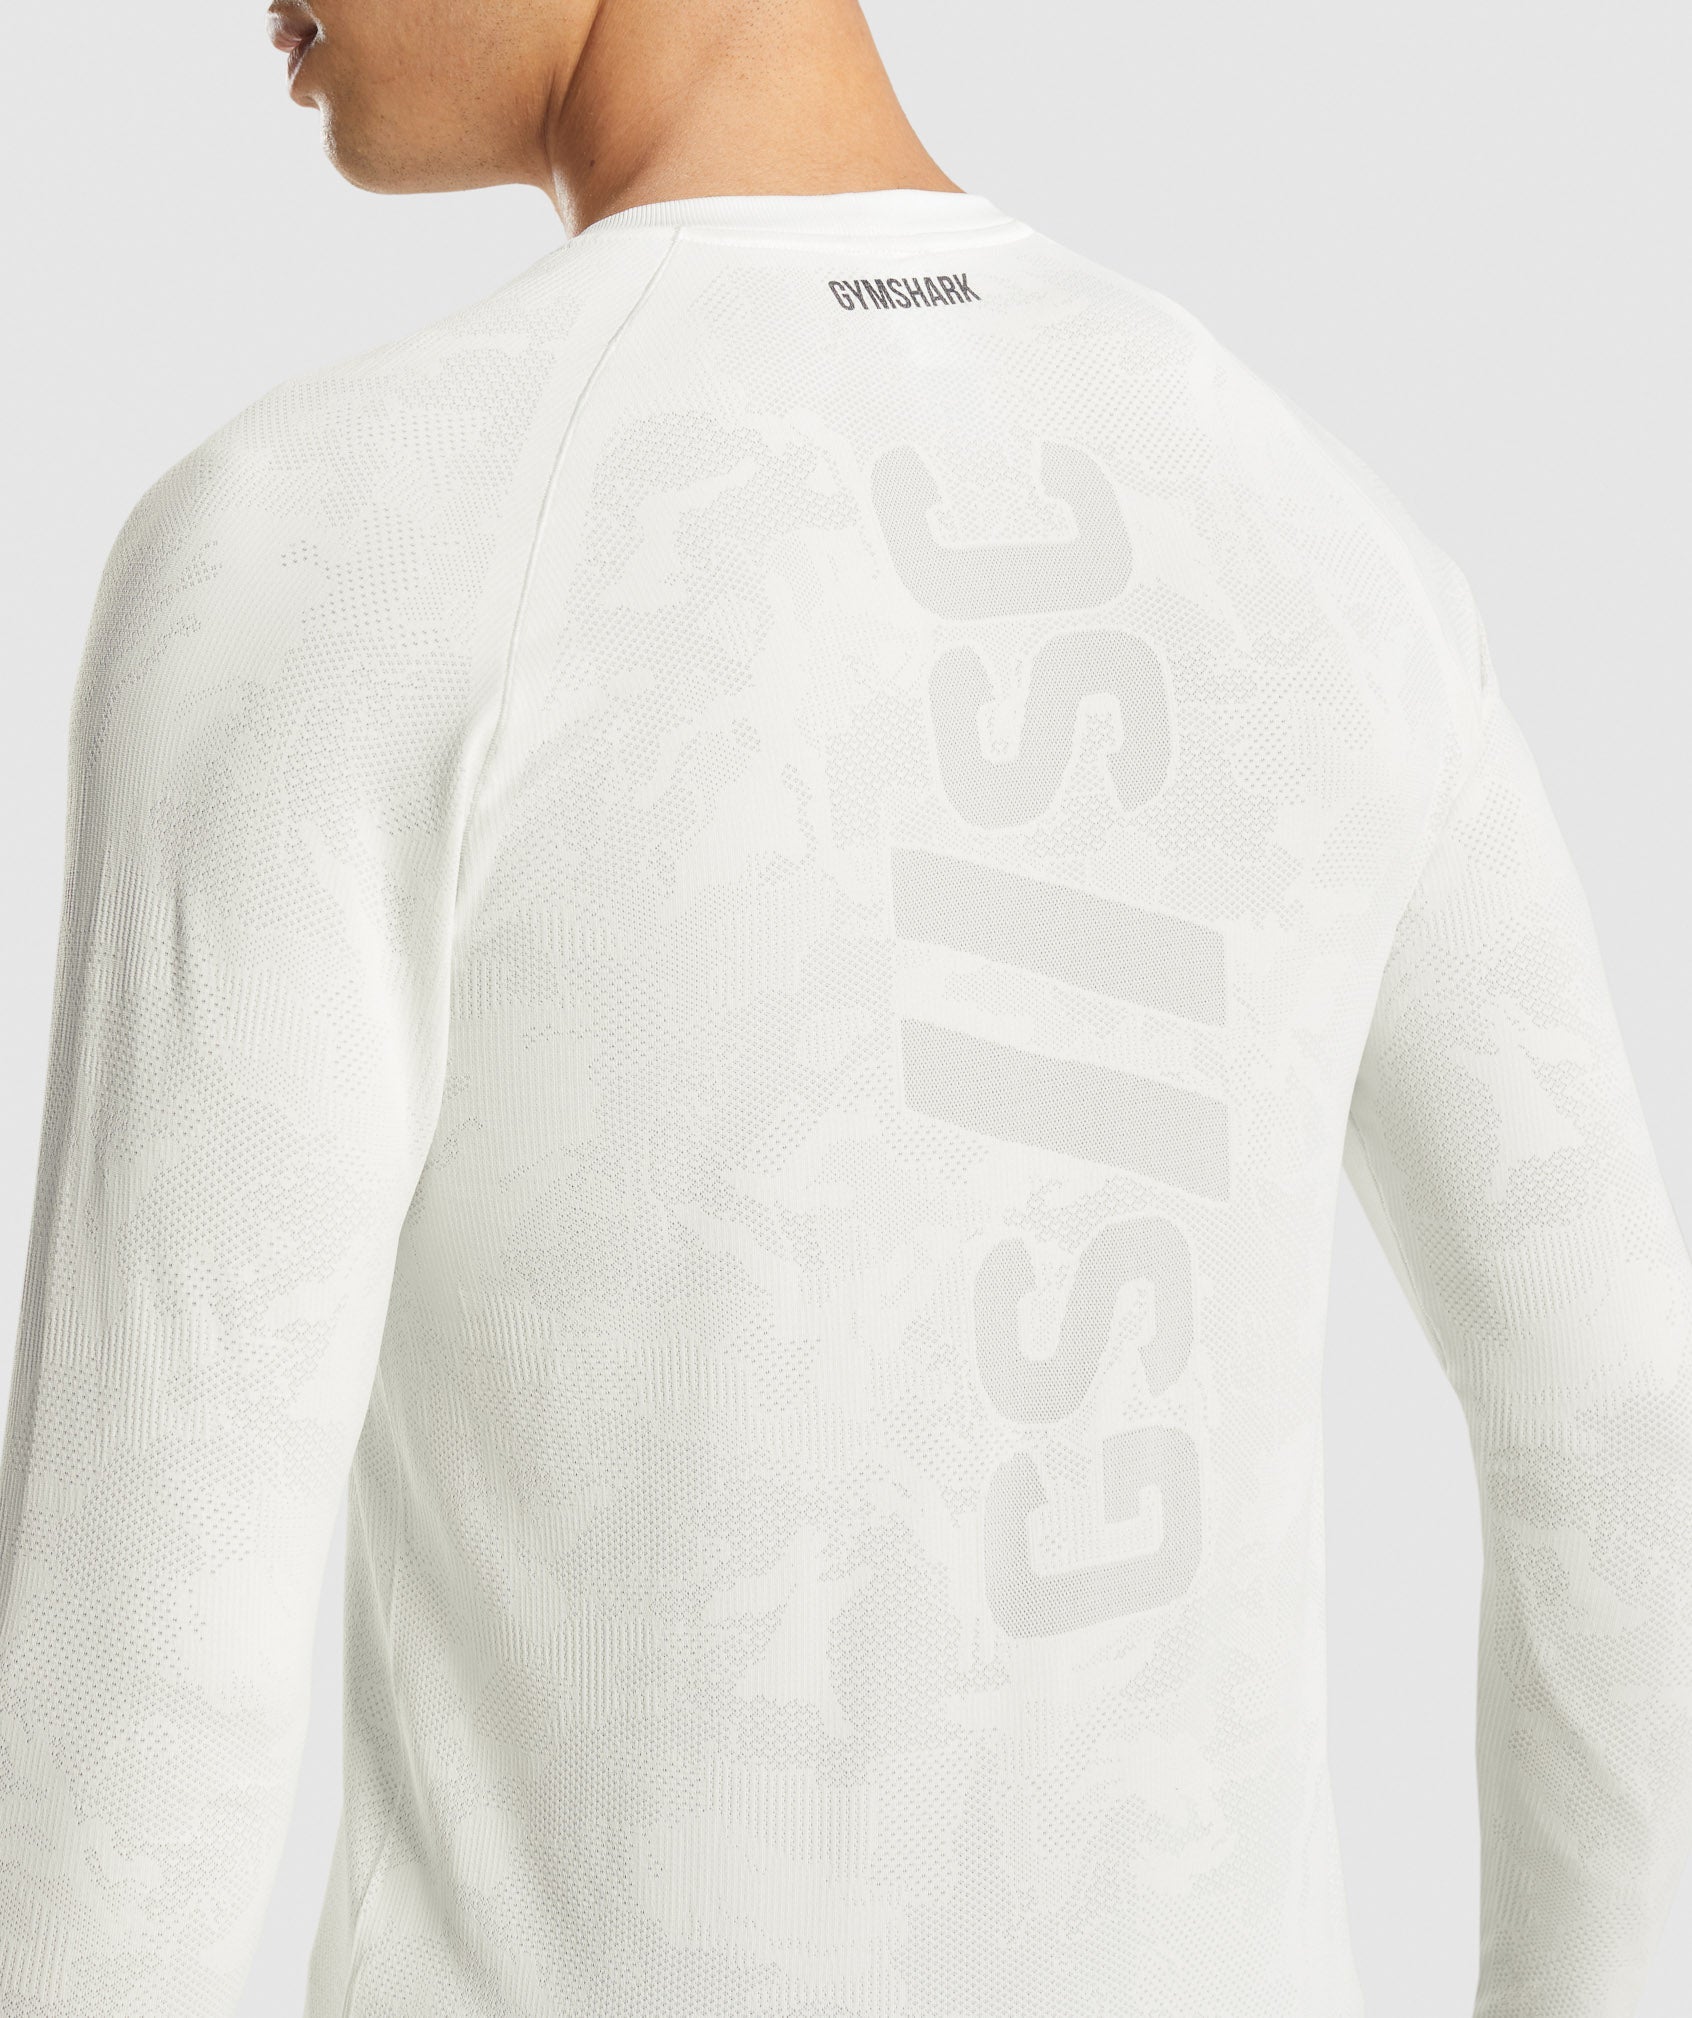 Gymshark//Steve Cook Long Sleeve Seamless T-Shirt in Off White/Light Grey - view 6